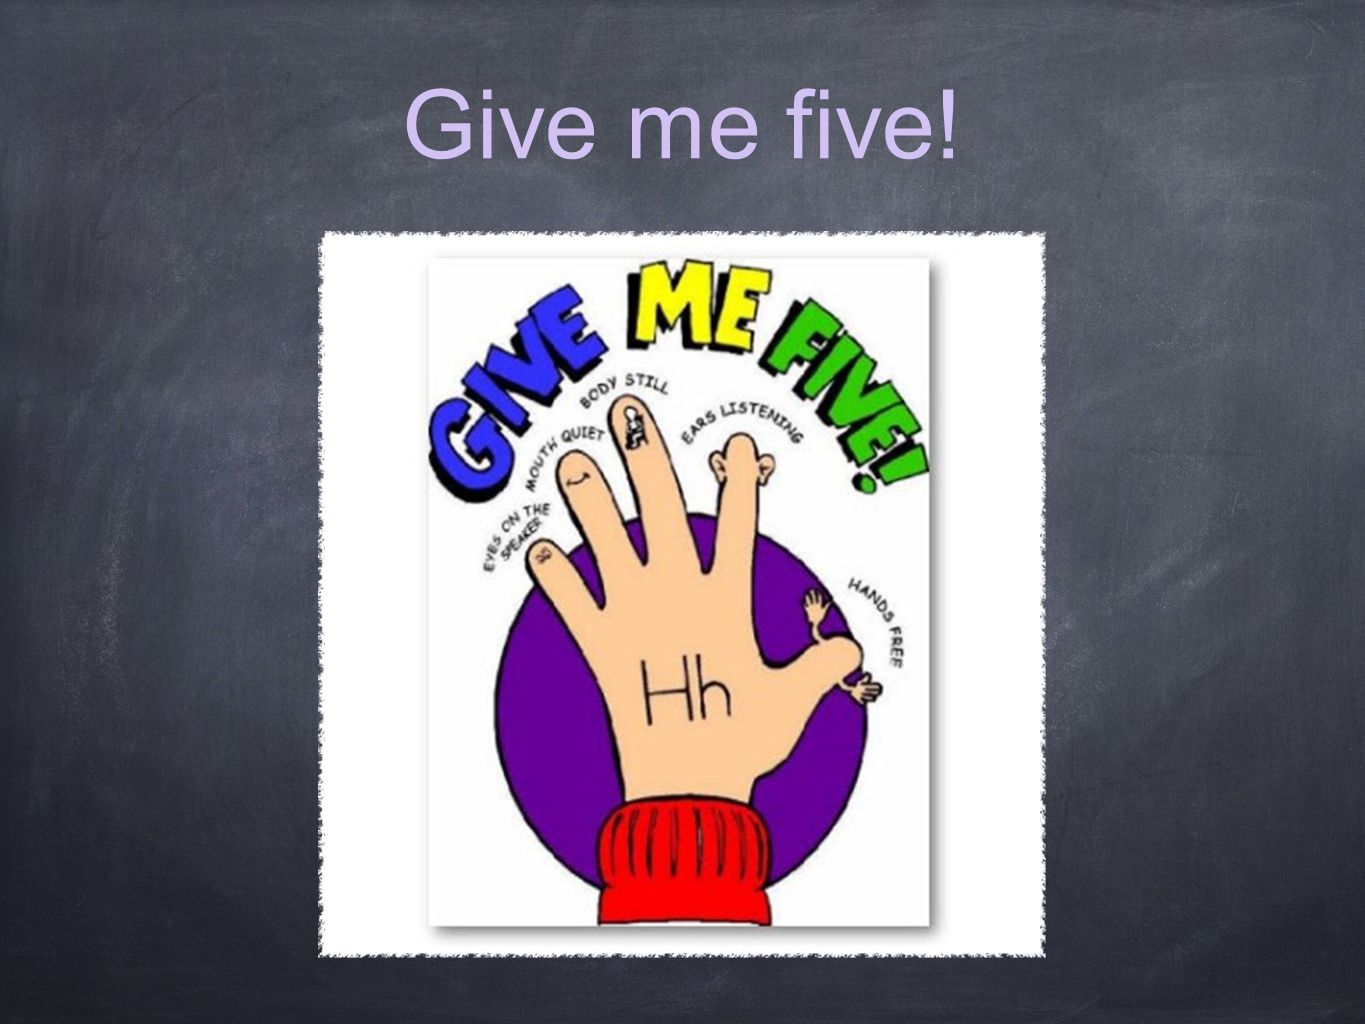 Give me five!